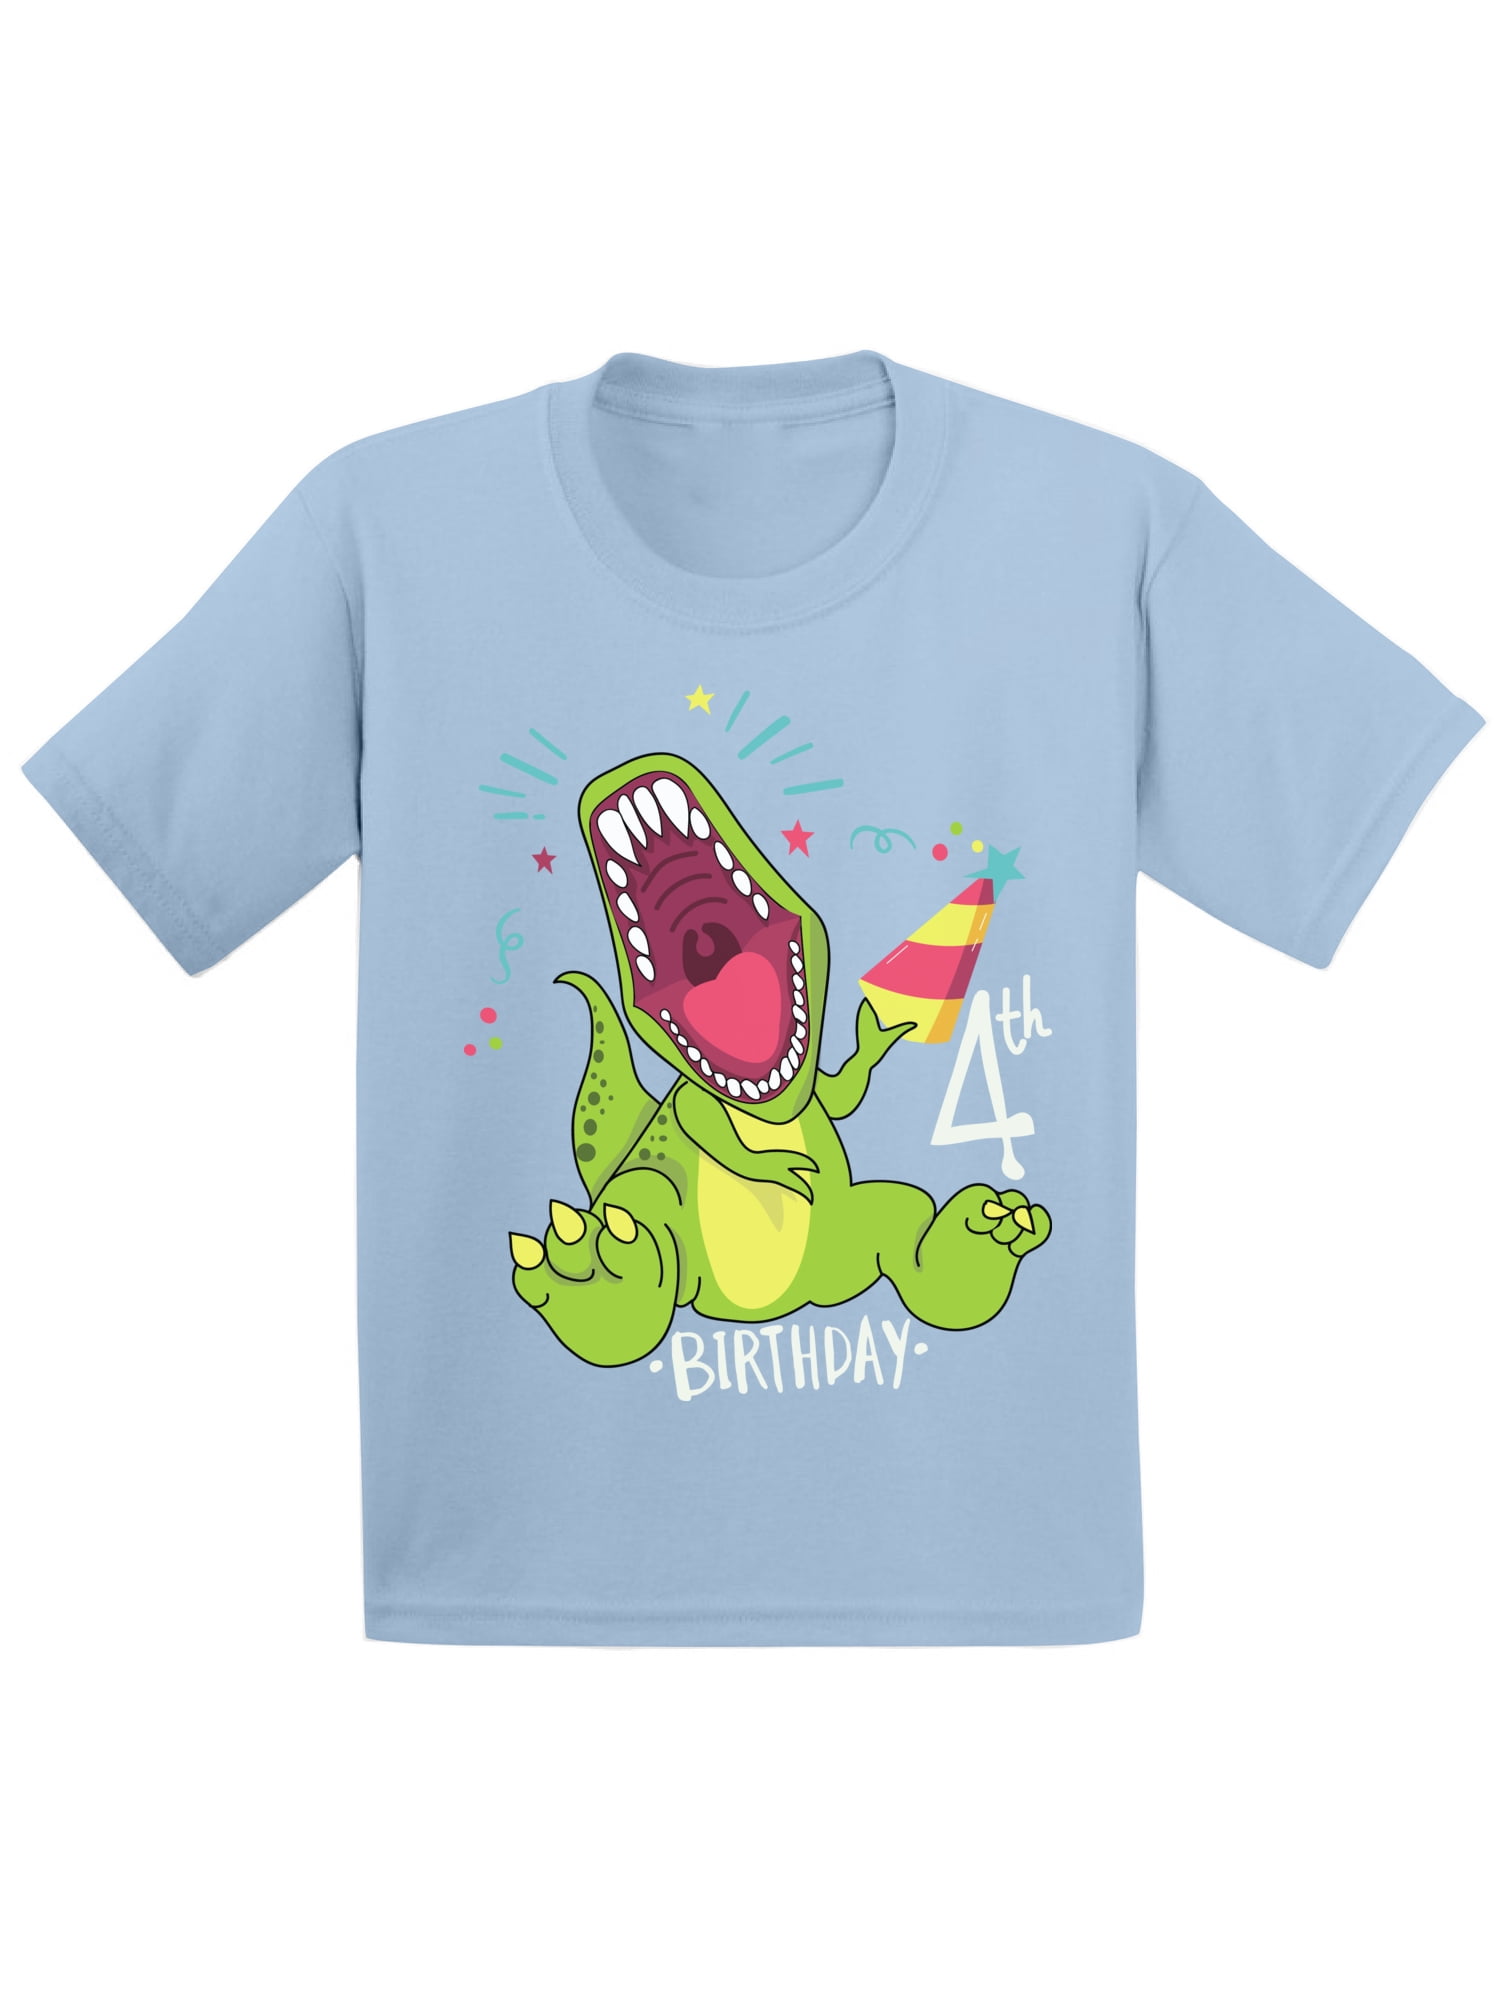 birthday Dinosaur birthday shirt birthday shirt youth ahirt dino raglan toddler shirt dinosaur